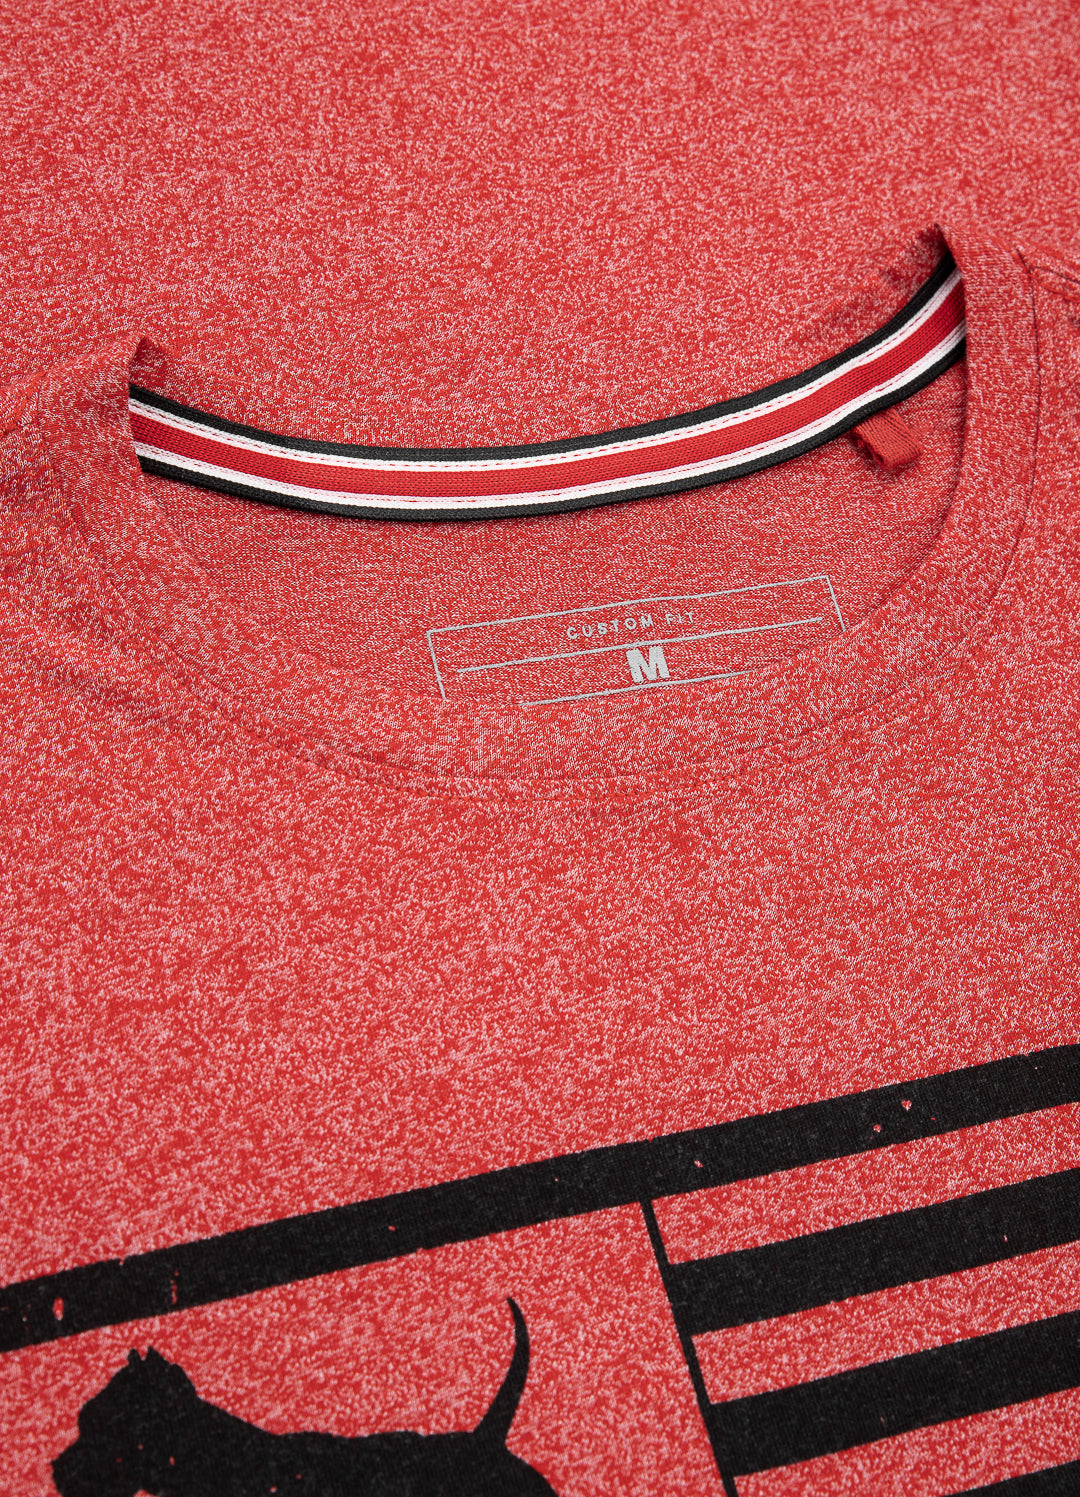 T-shirt PITBULL USA Middleweight 190 Custom Fit Red MLG - Pitbull West Coast International Store 